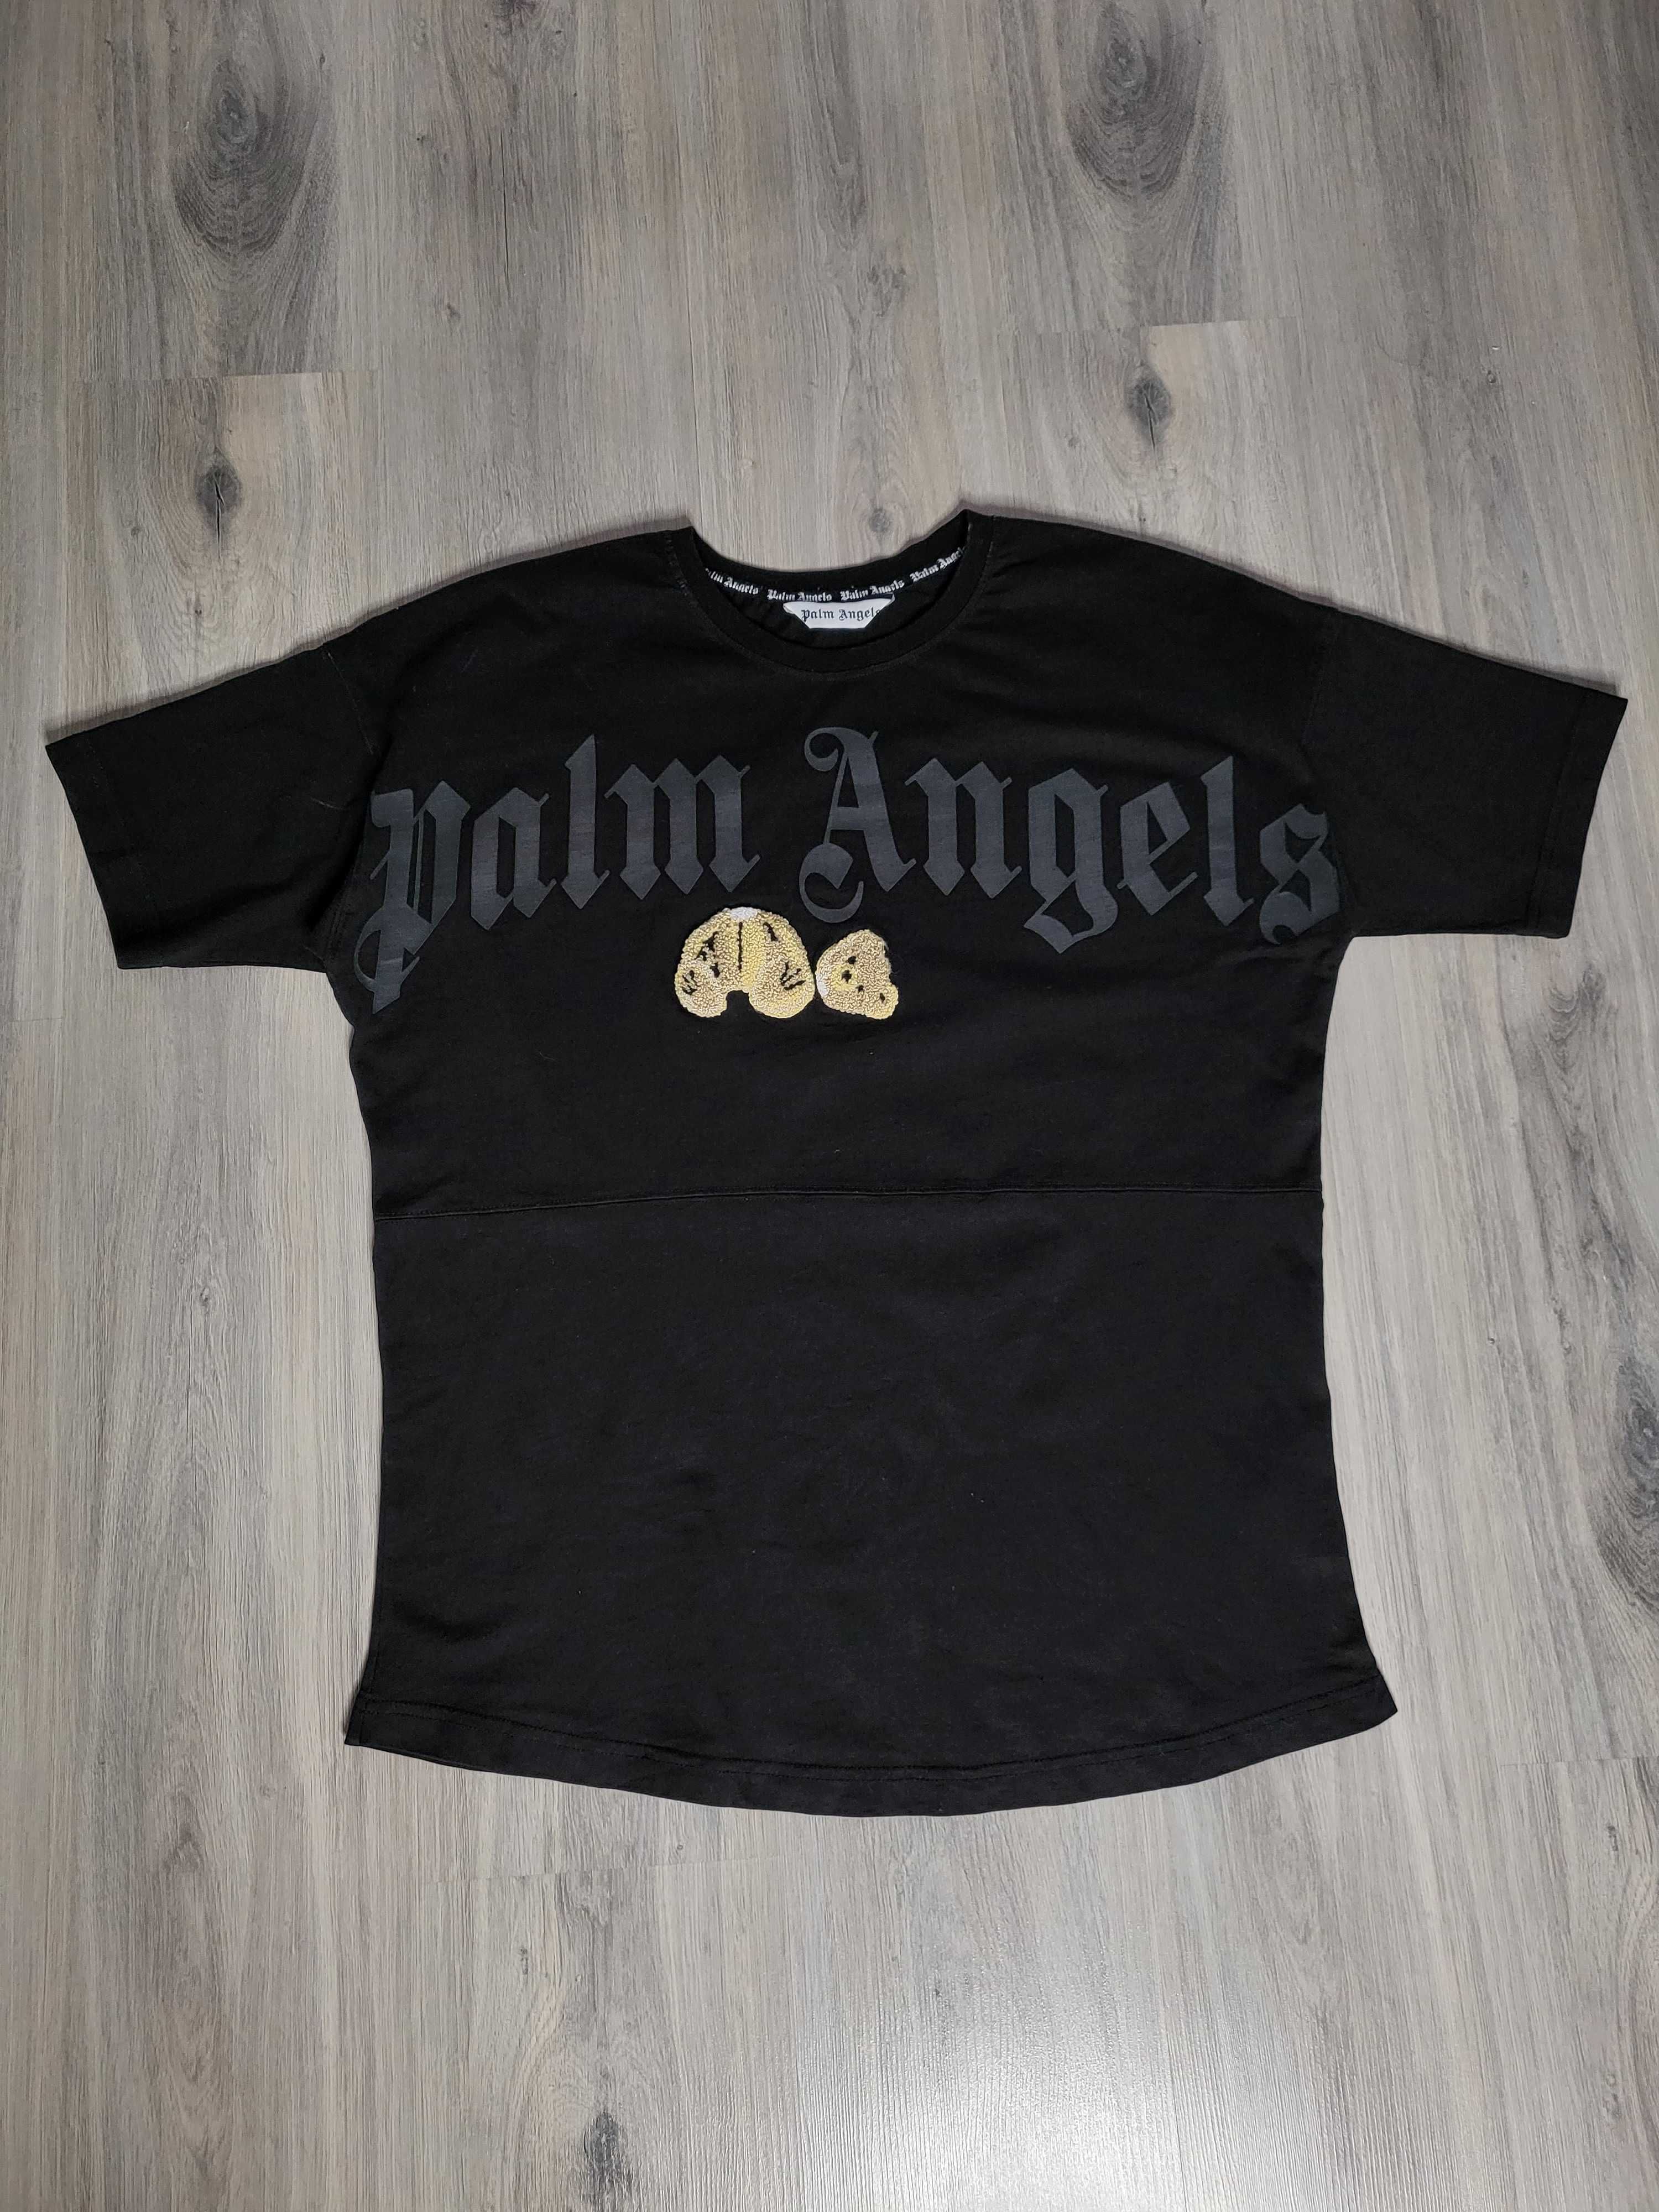 T-shirt koszulka Palm Angels big print duże logo rozmiar M/L black